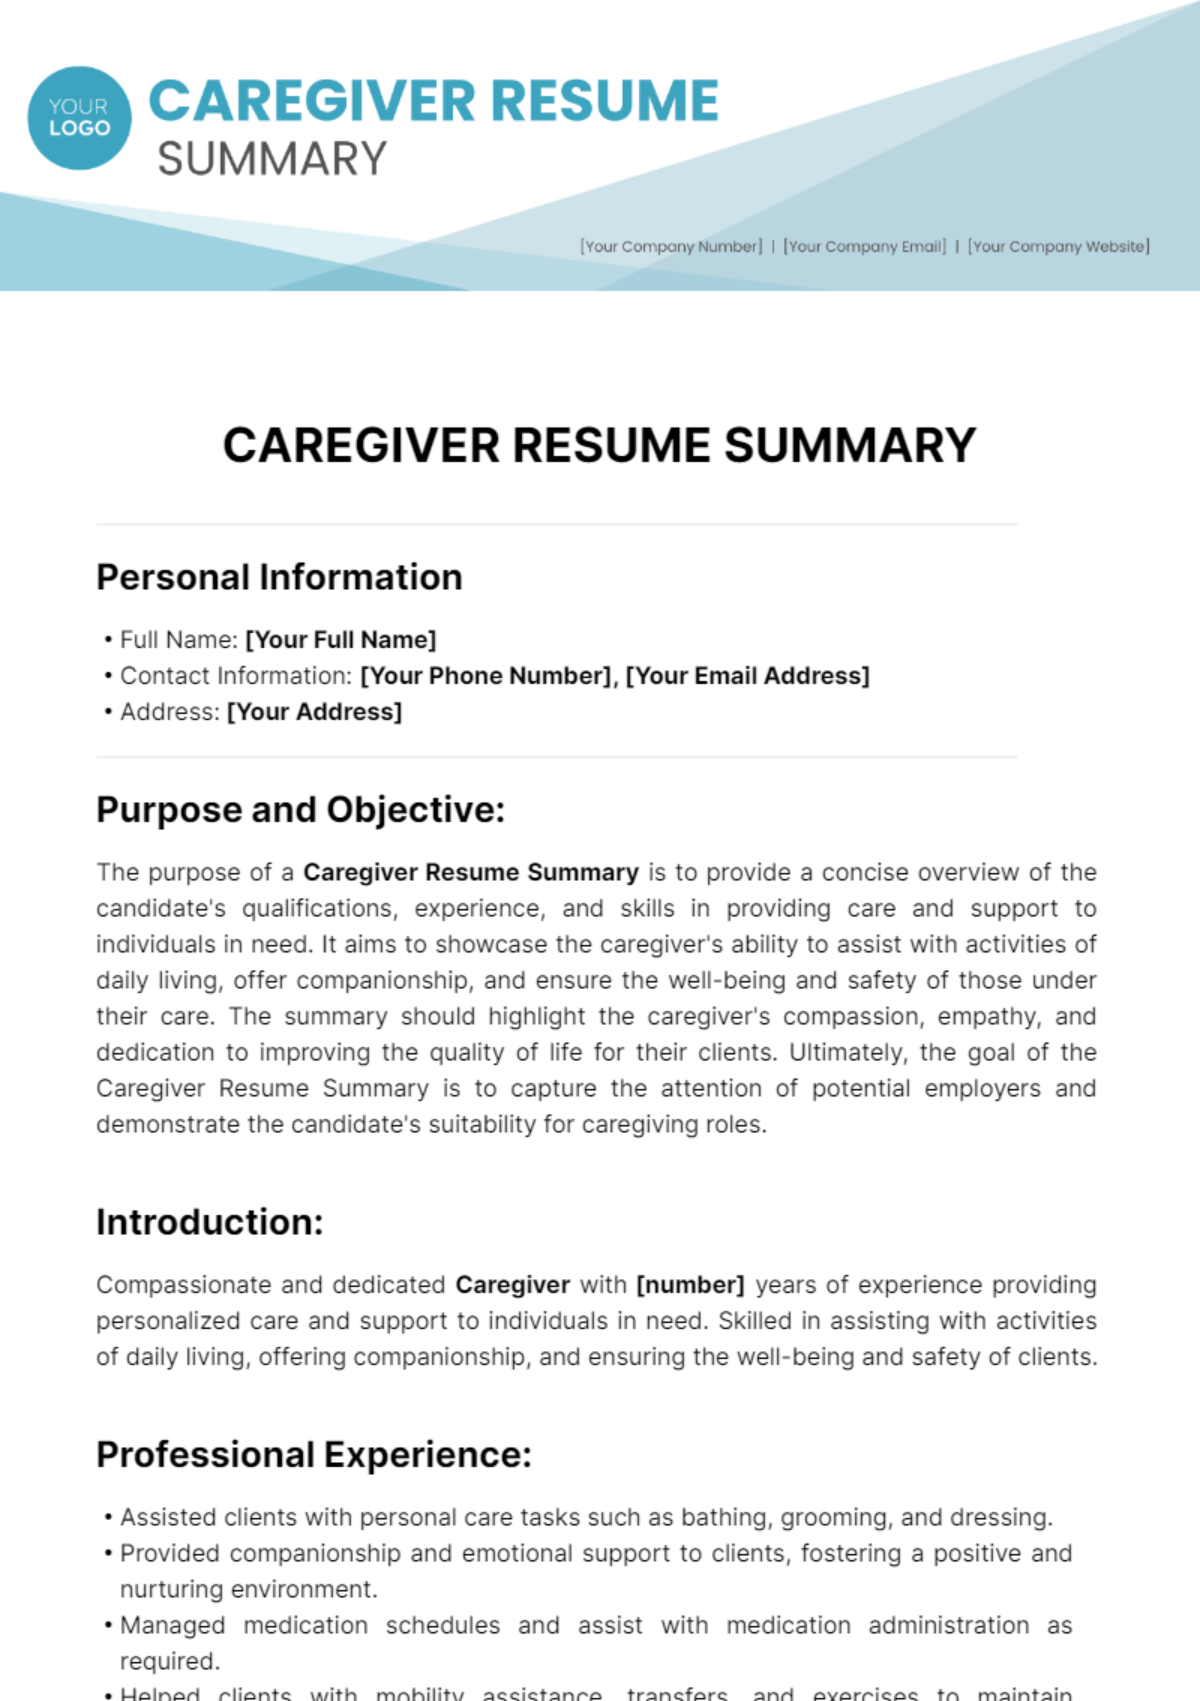 Free Caregiver Resume Summary Template